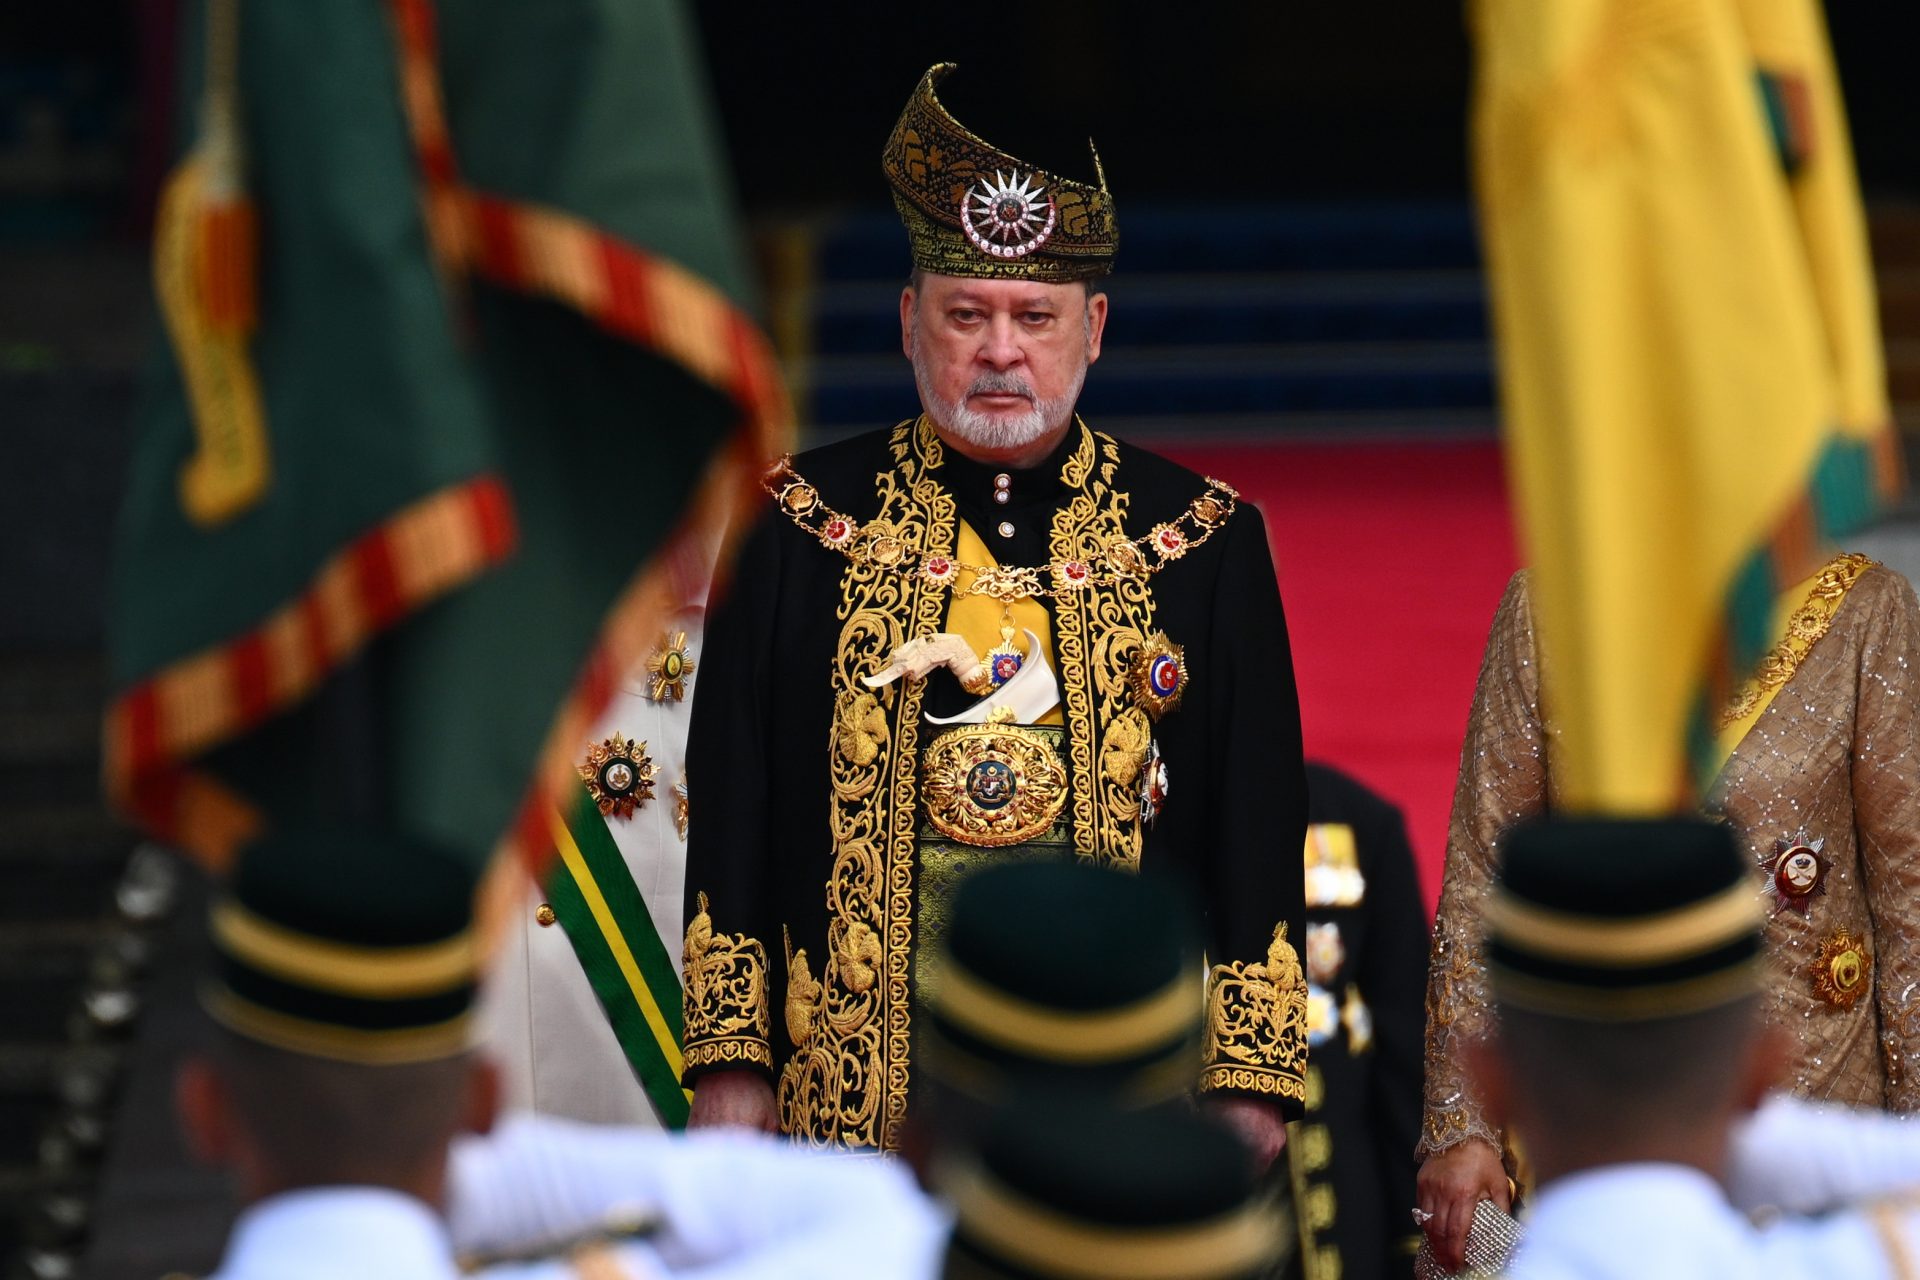 This is Sultan Ibrahim Iskandar, the 17th King of Malaysia